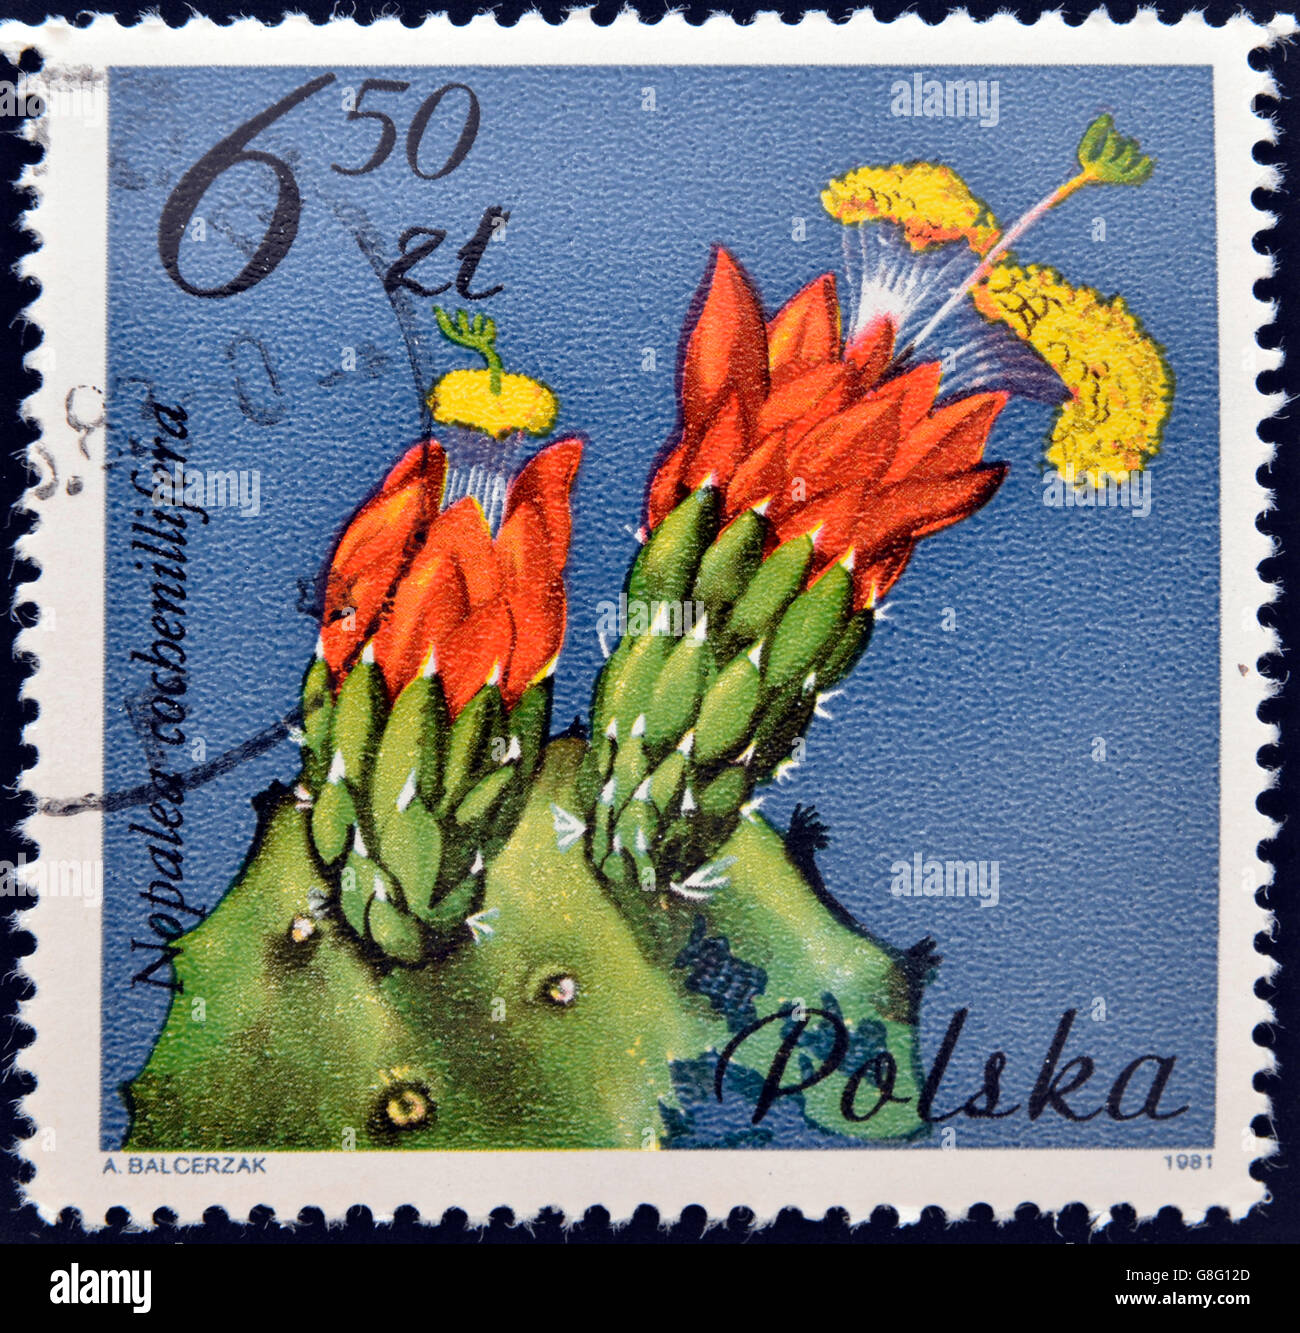 POLAND - CIRCA 1981: A Stamp printed in Poland shows Nopalea cochenillifera, circa 1981 Stock Photo